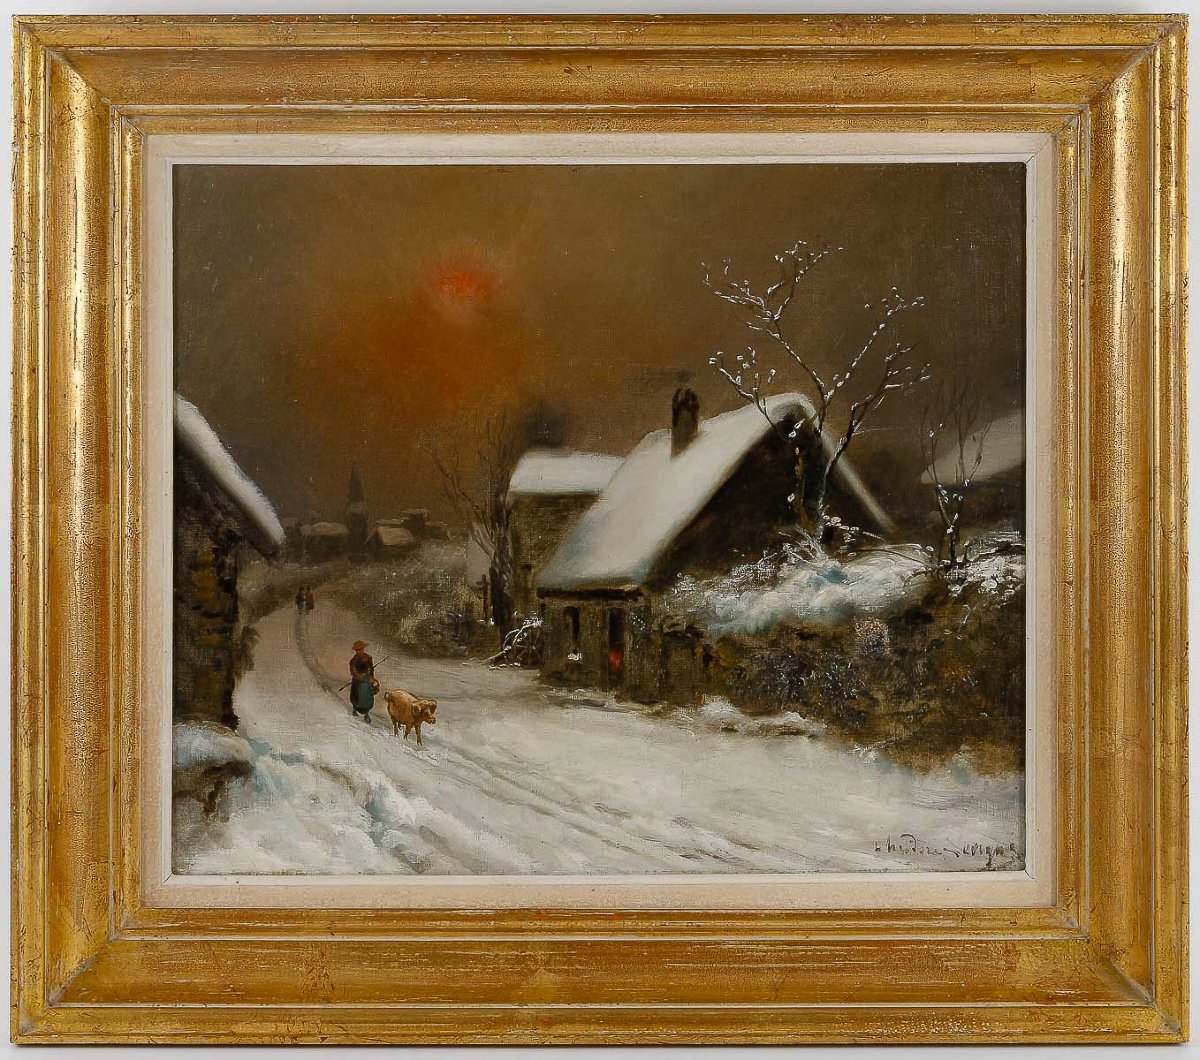 Theodore Levigne (1848-1912) Village Sous La Neige Oil On Canvas Late 19th Century